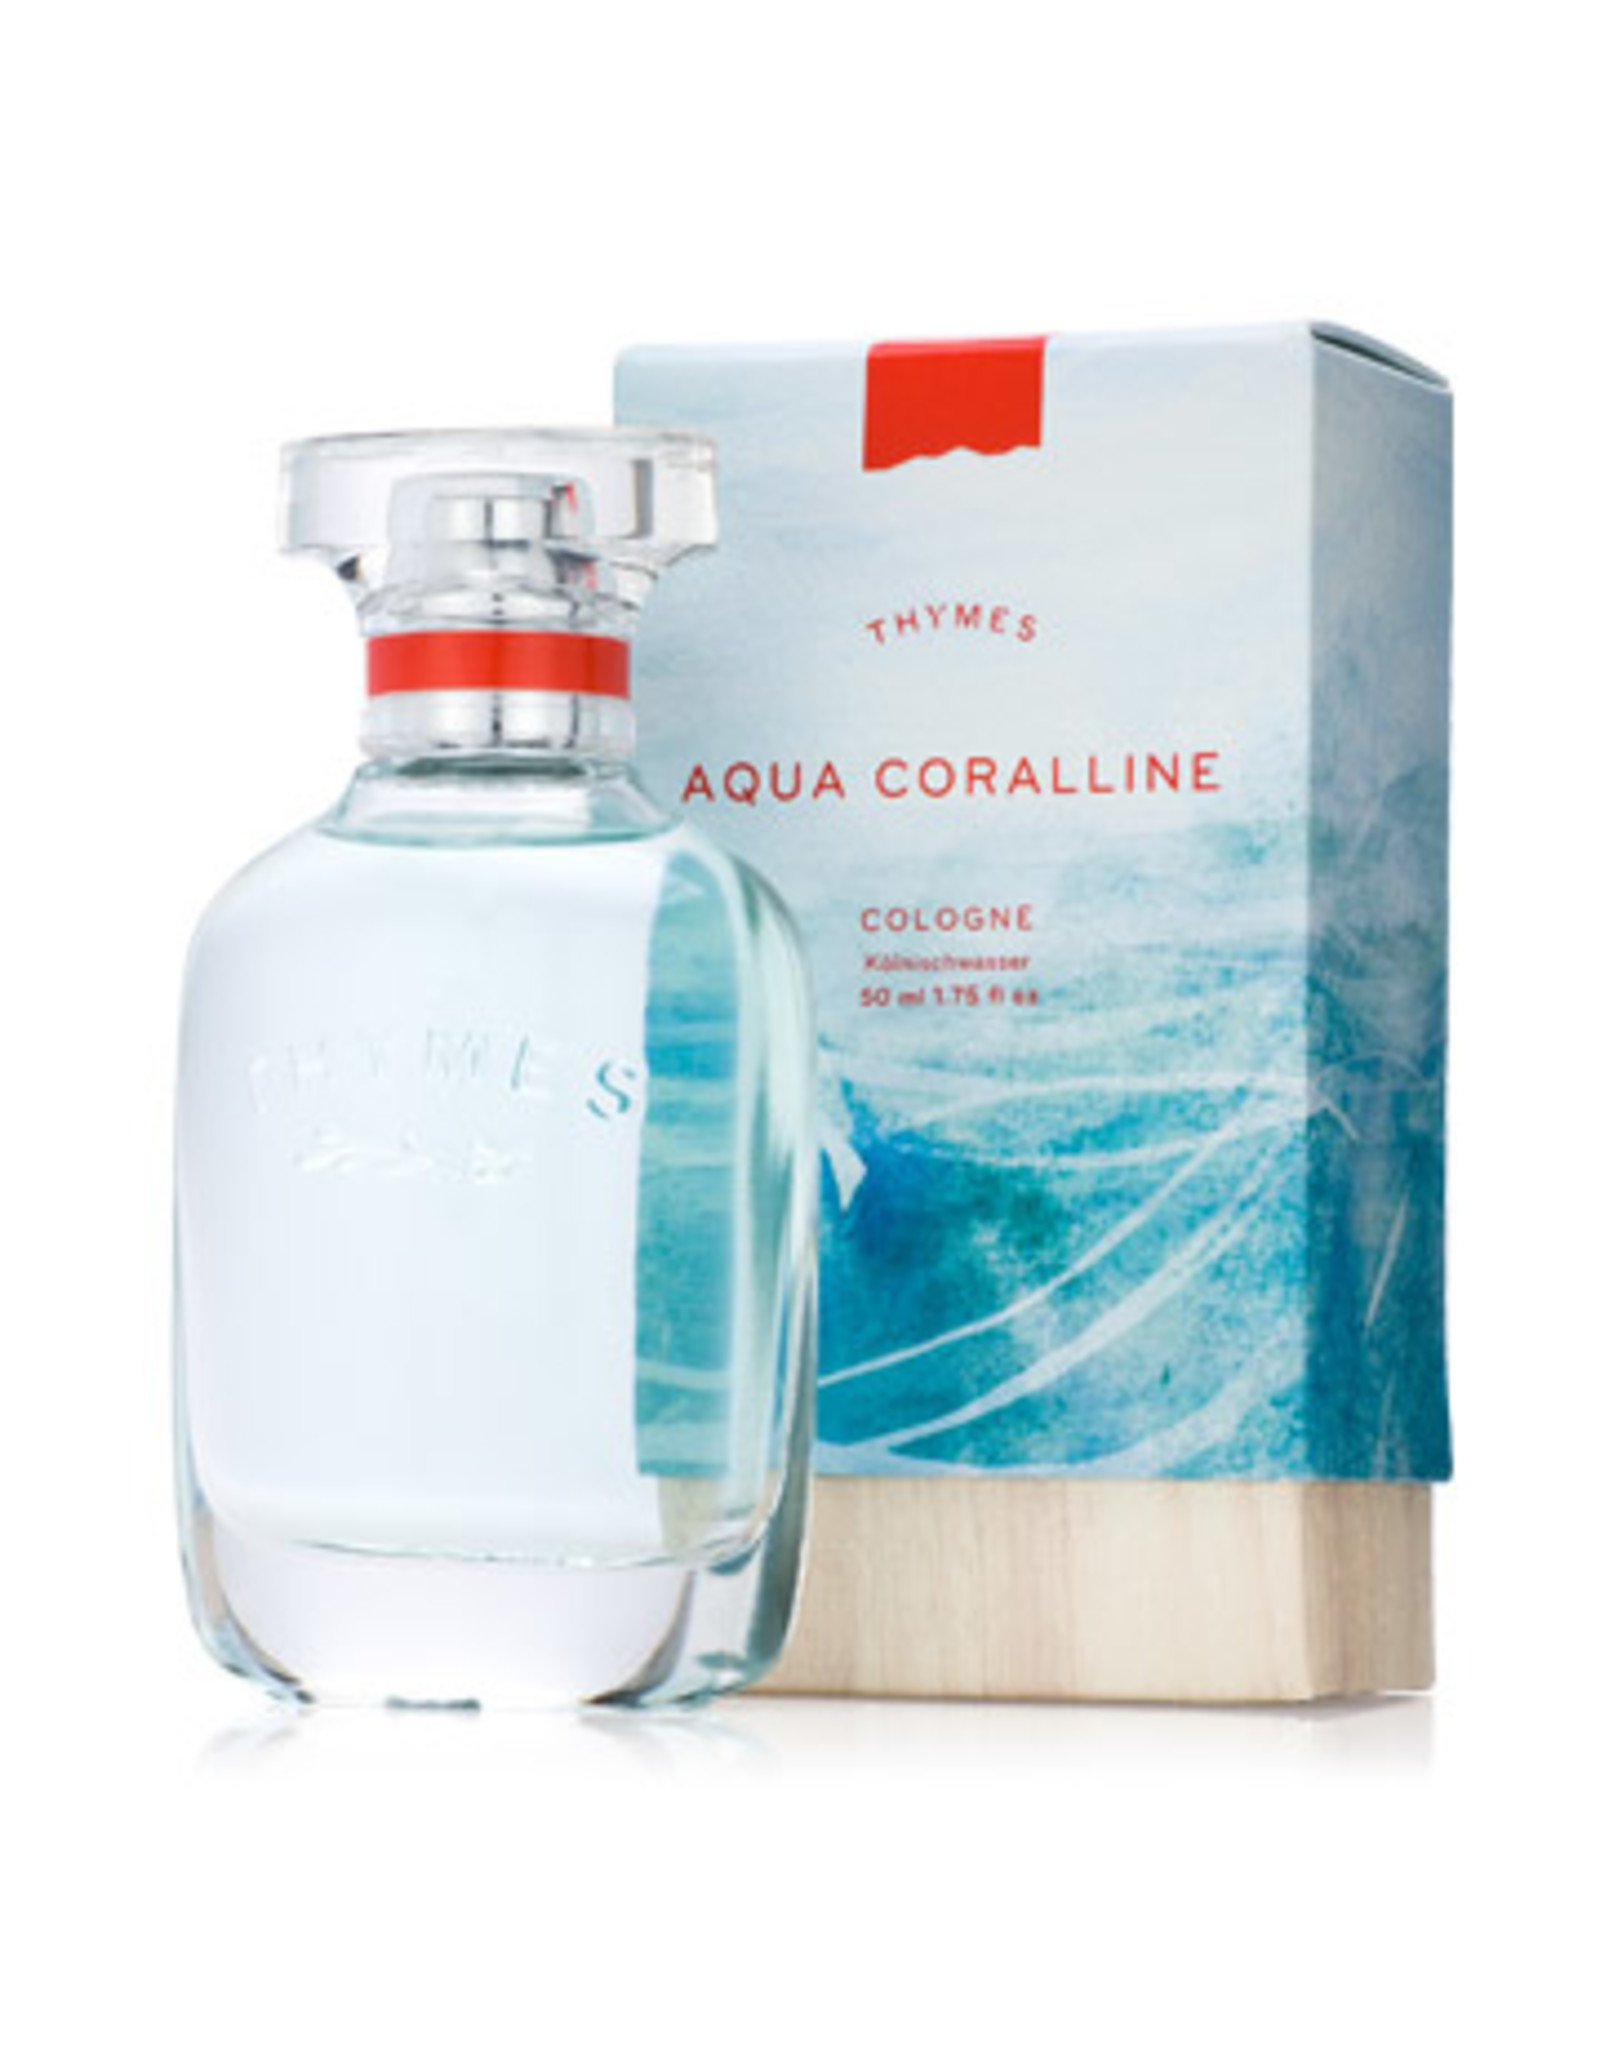 Thymes Aqua Coralline Cologne 1.75 oz